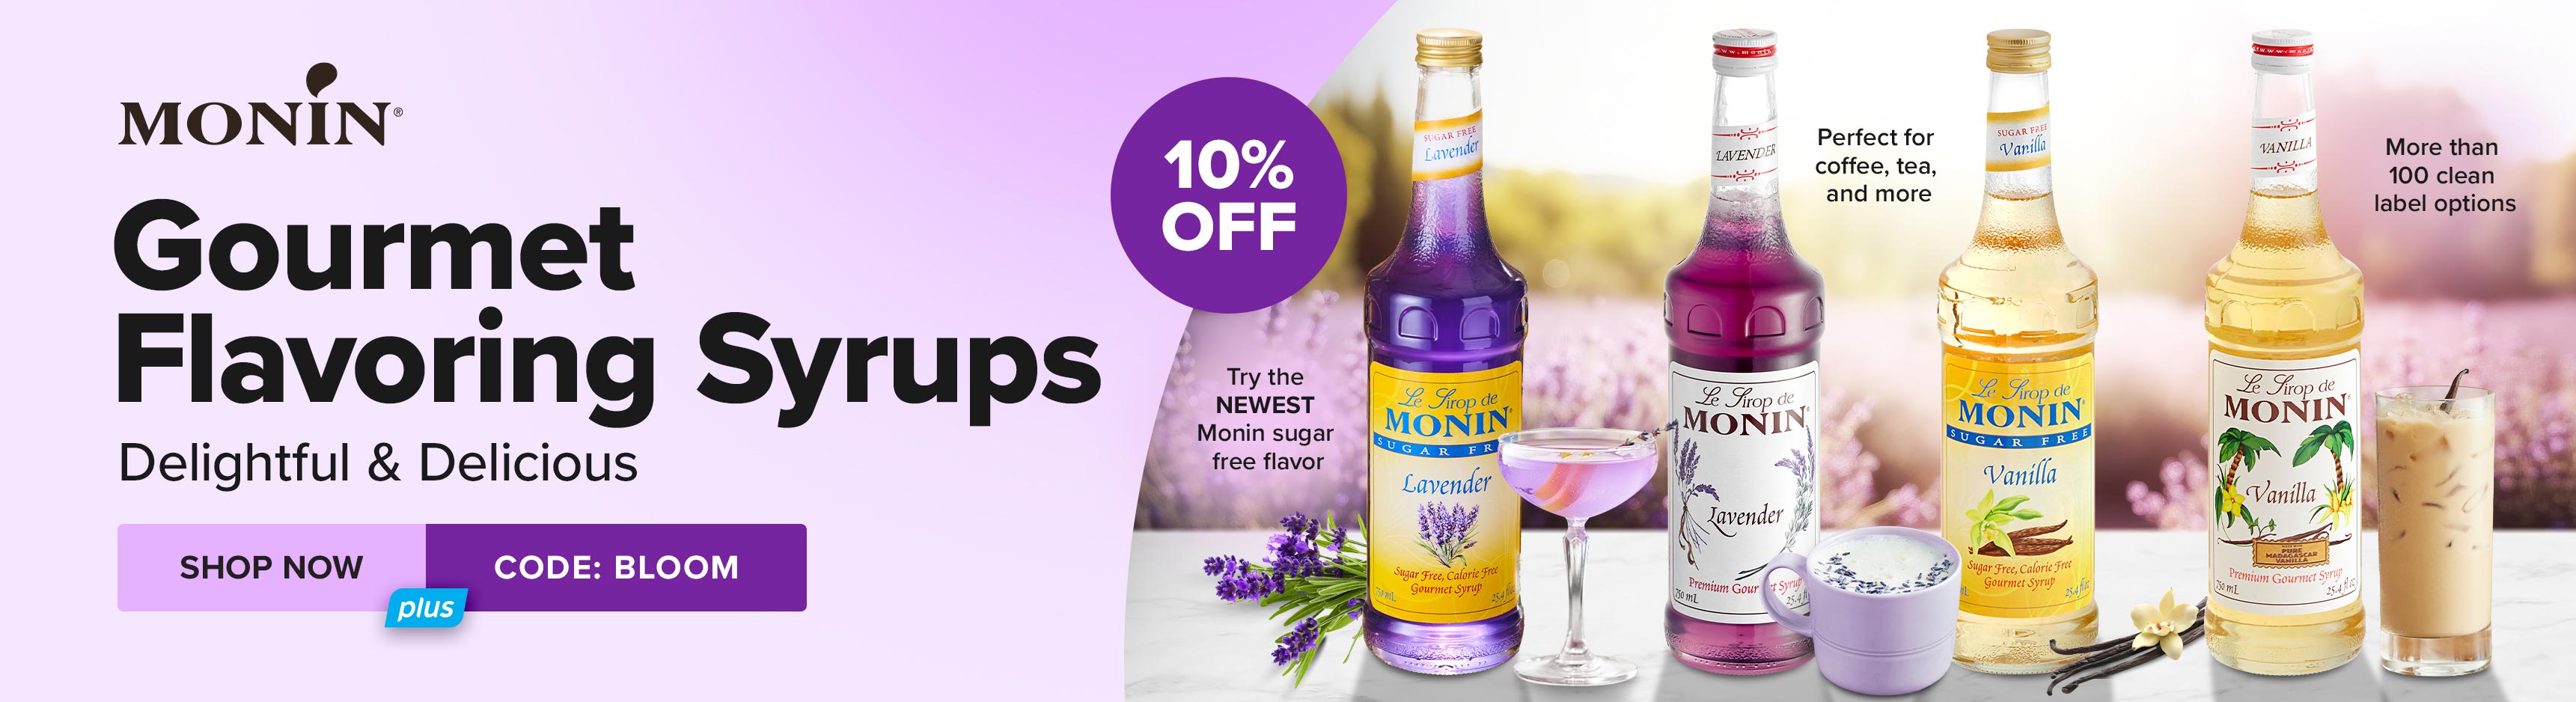 10% Off Monin Gourmet Flavoring Syrups, Delightful & Delicious, Use code: BLOOM